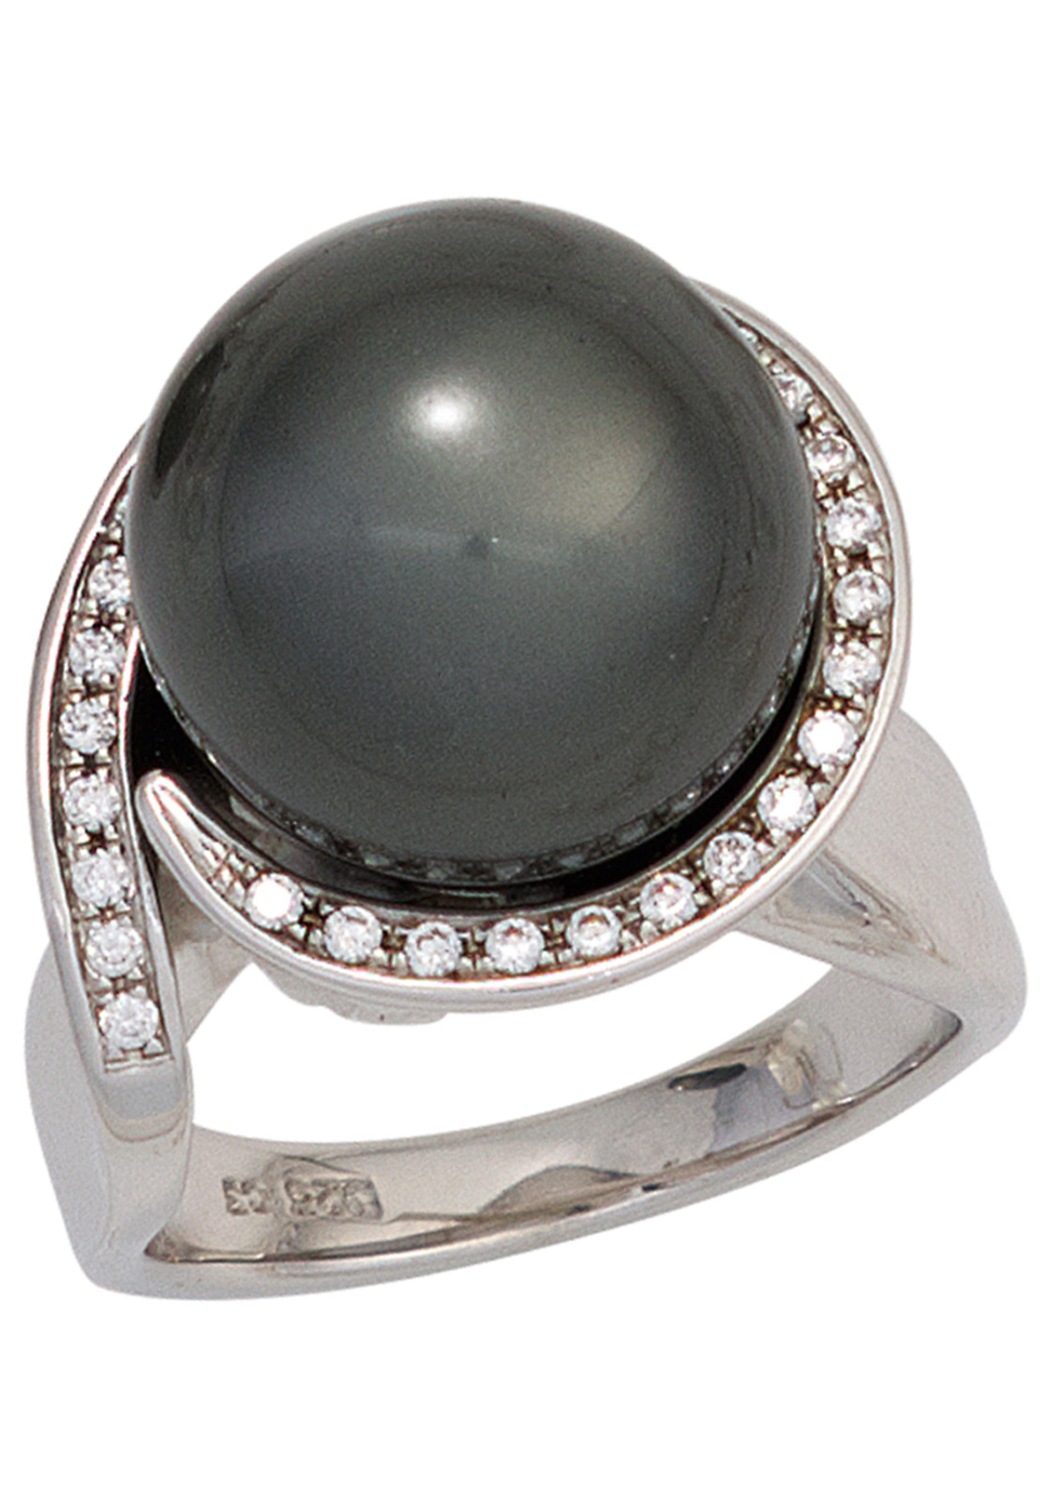 Silber 925 mit synthetischer und Zirkonia Perle JOBO Perlenring